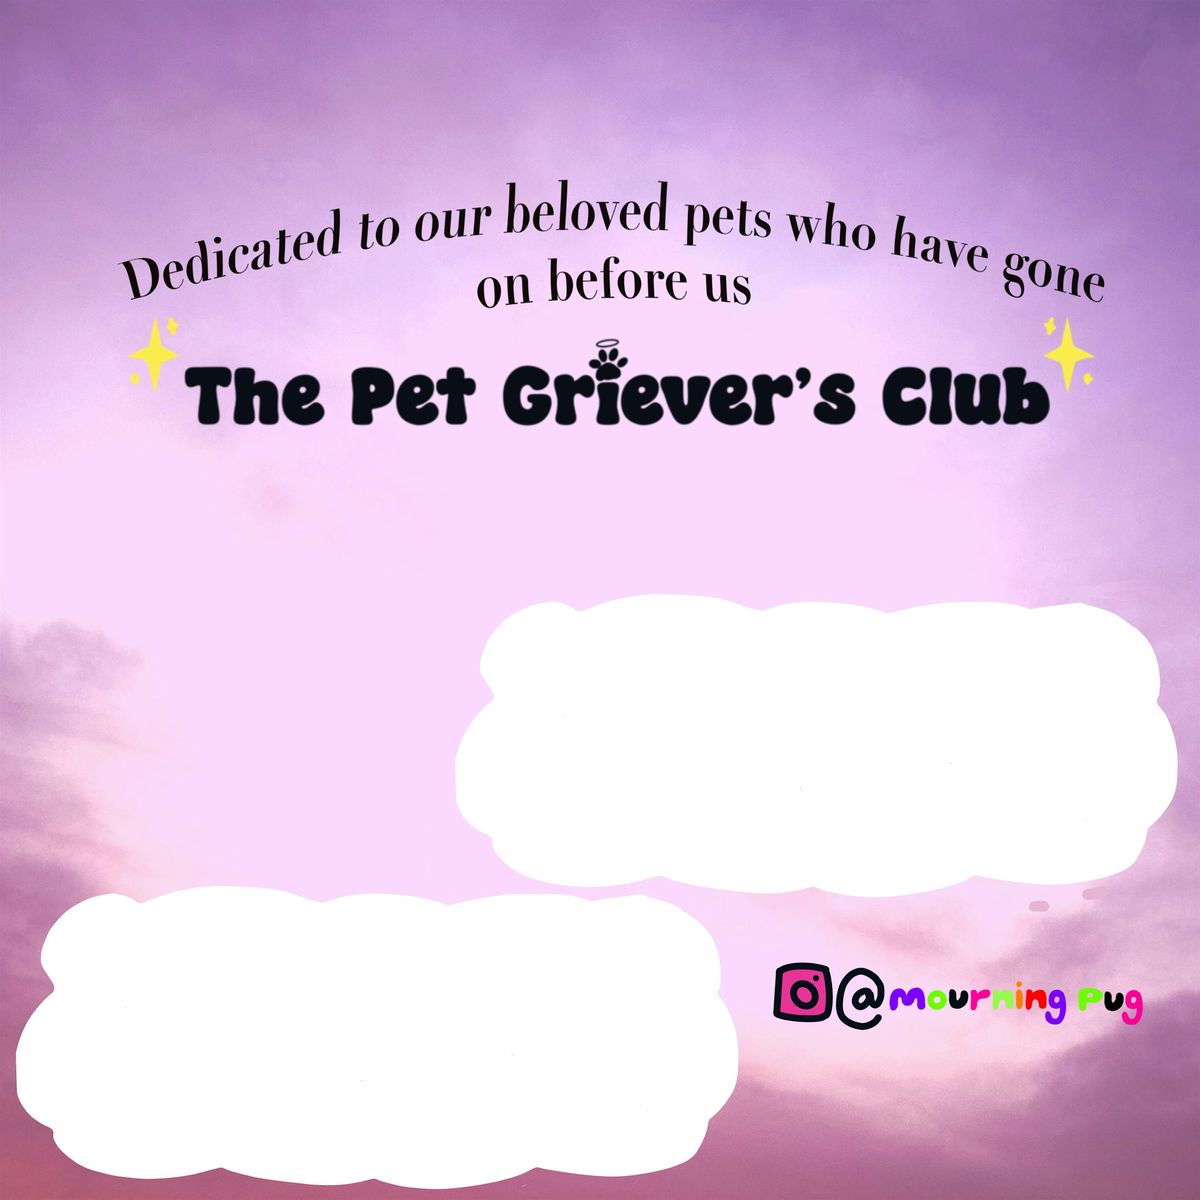 The Pet Griever's Club - September Meetup